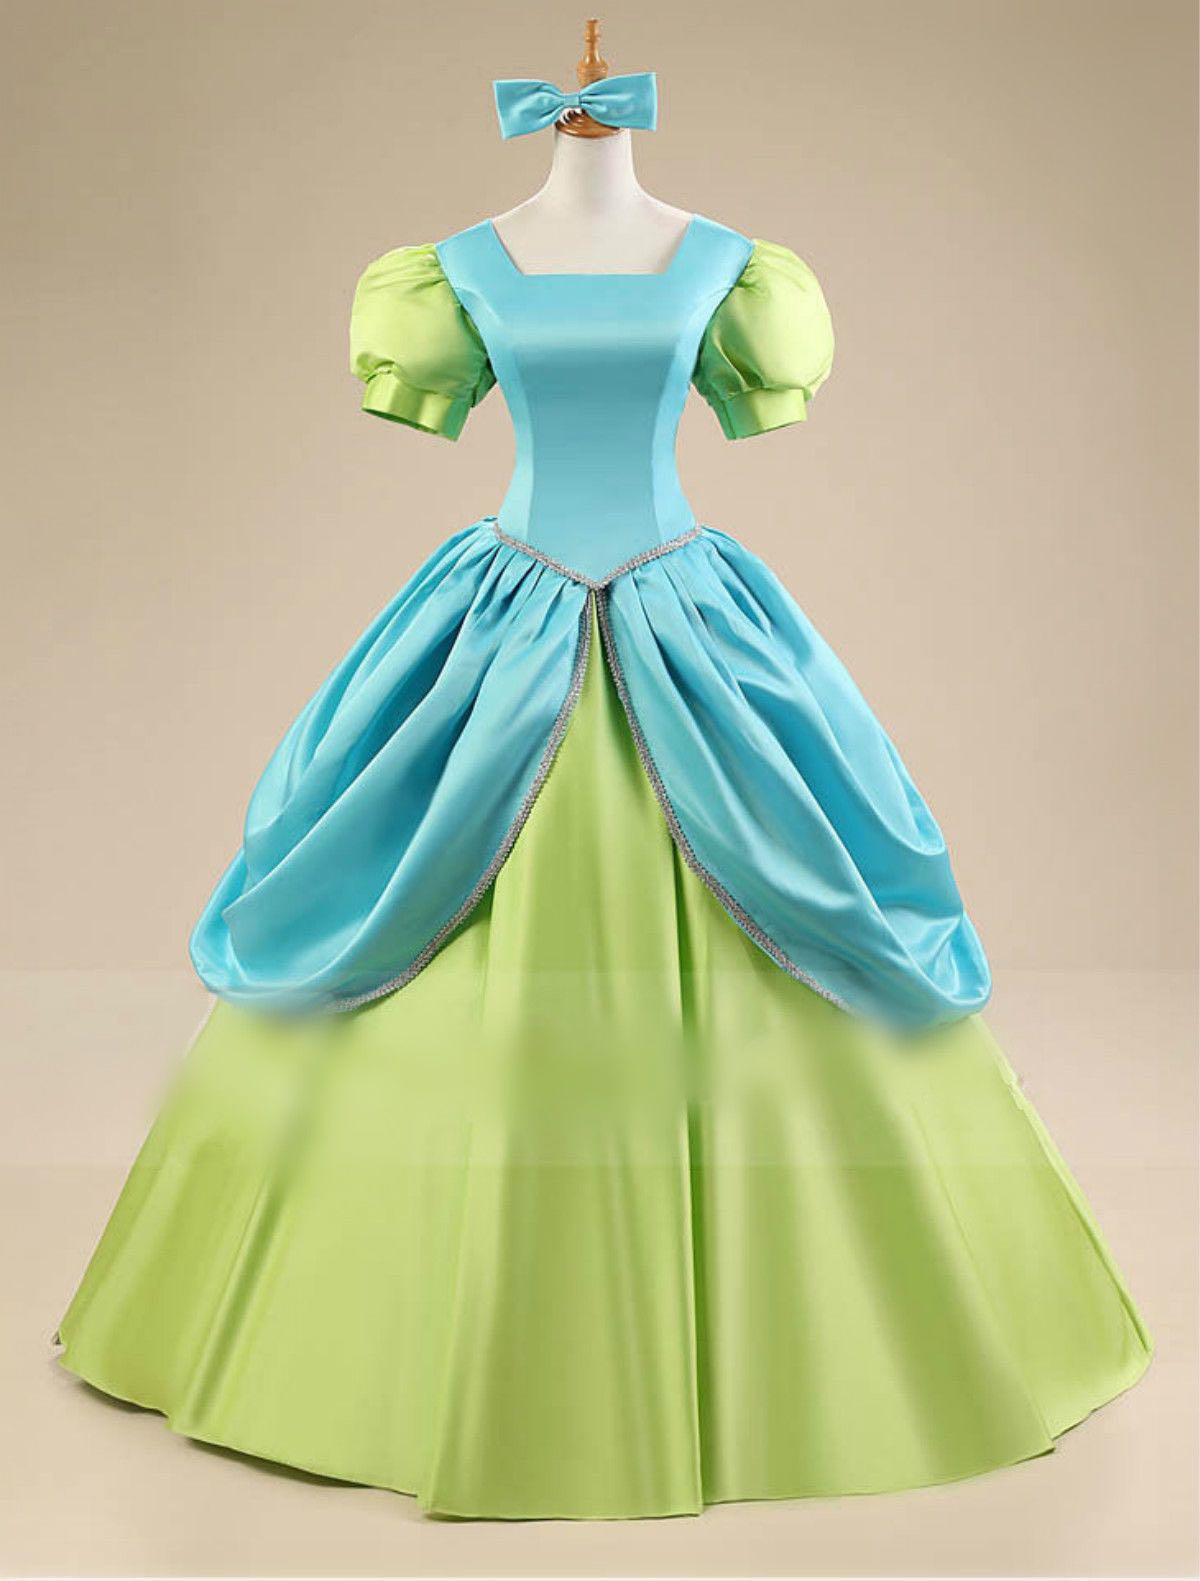 Cinderella Drizella Tremaine Cinderella's Stepsisters Cosplay Kostüm